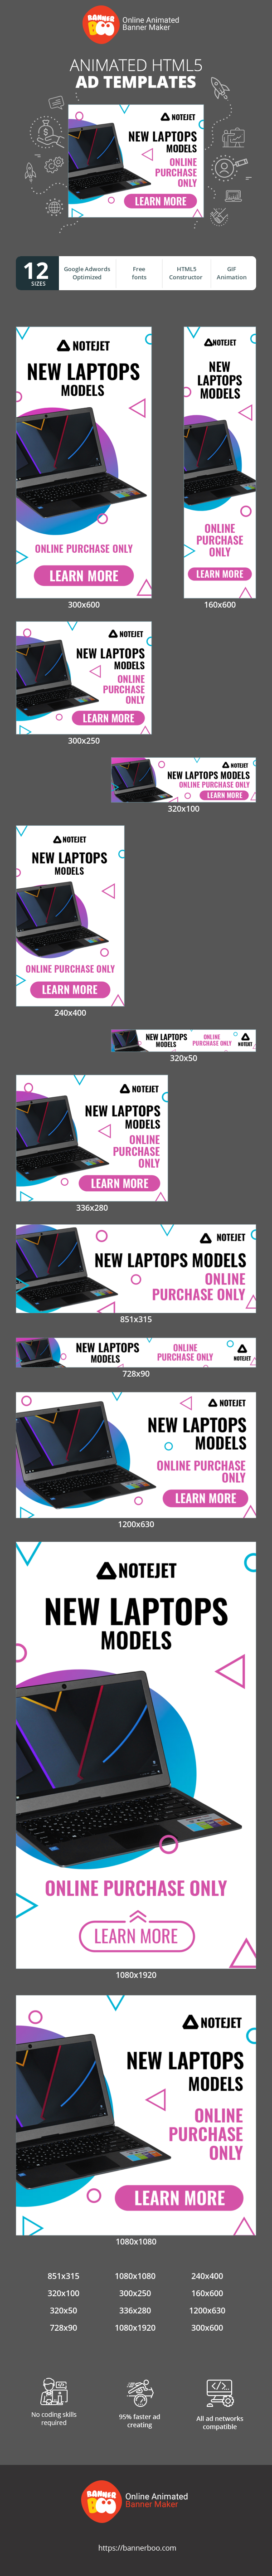 Szablon reklamy banerowej — New Laptops Models — Online Purchase Only